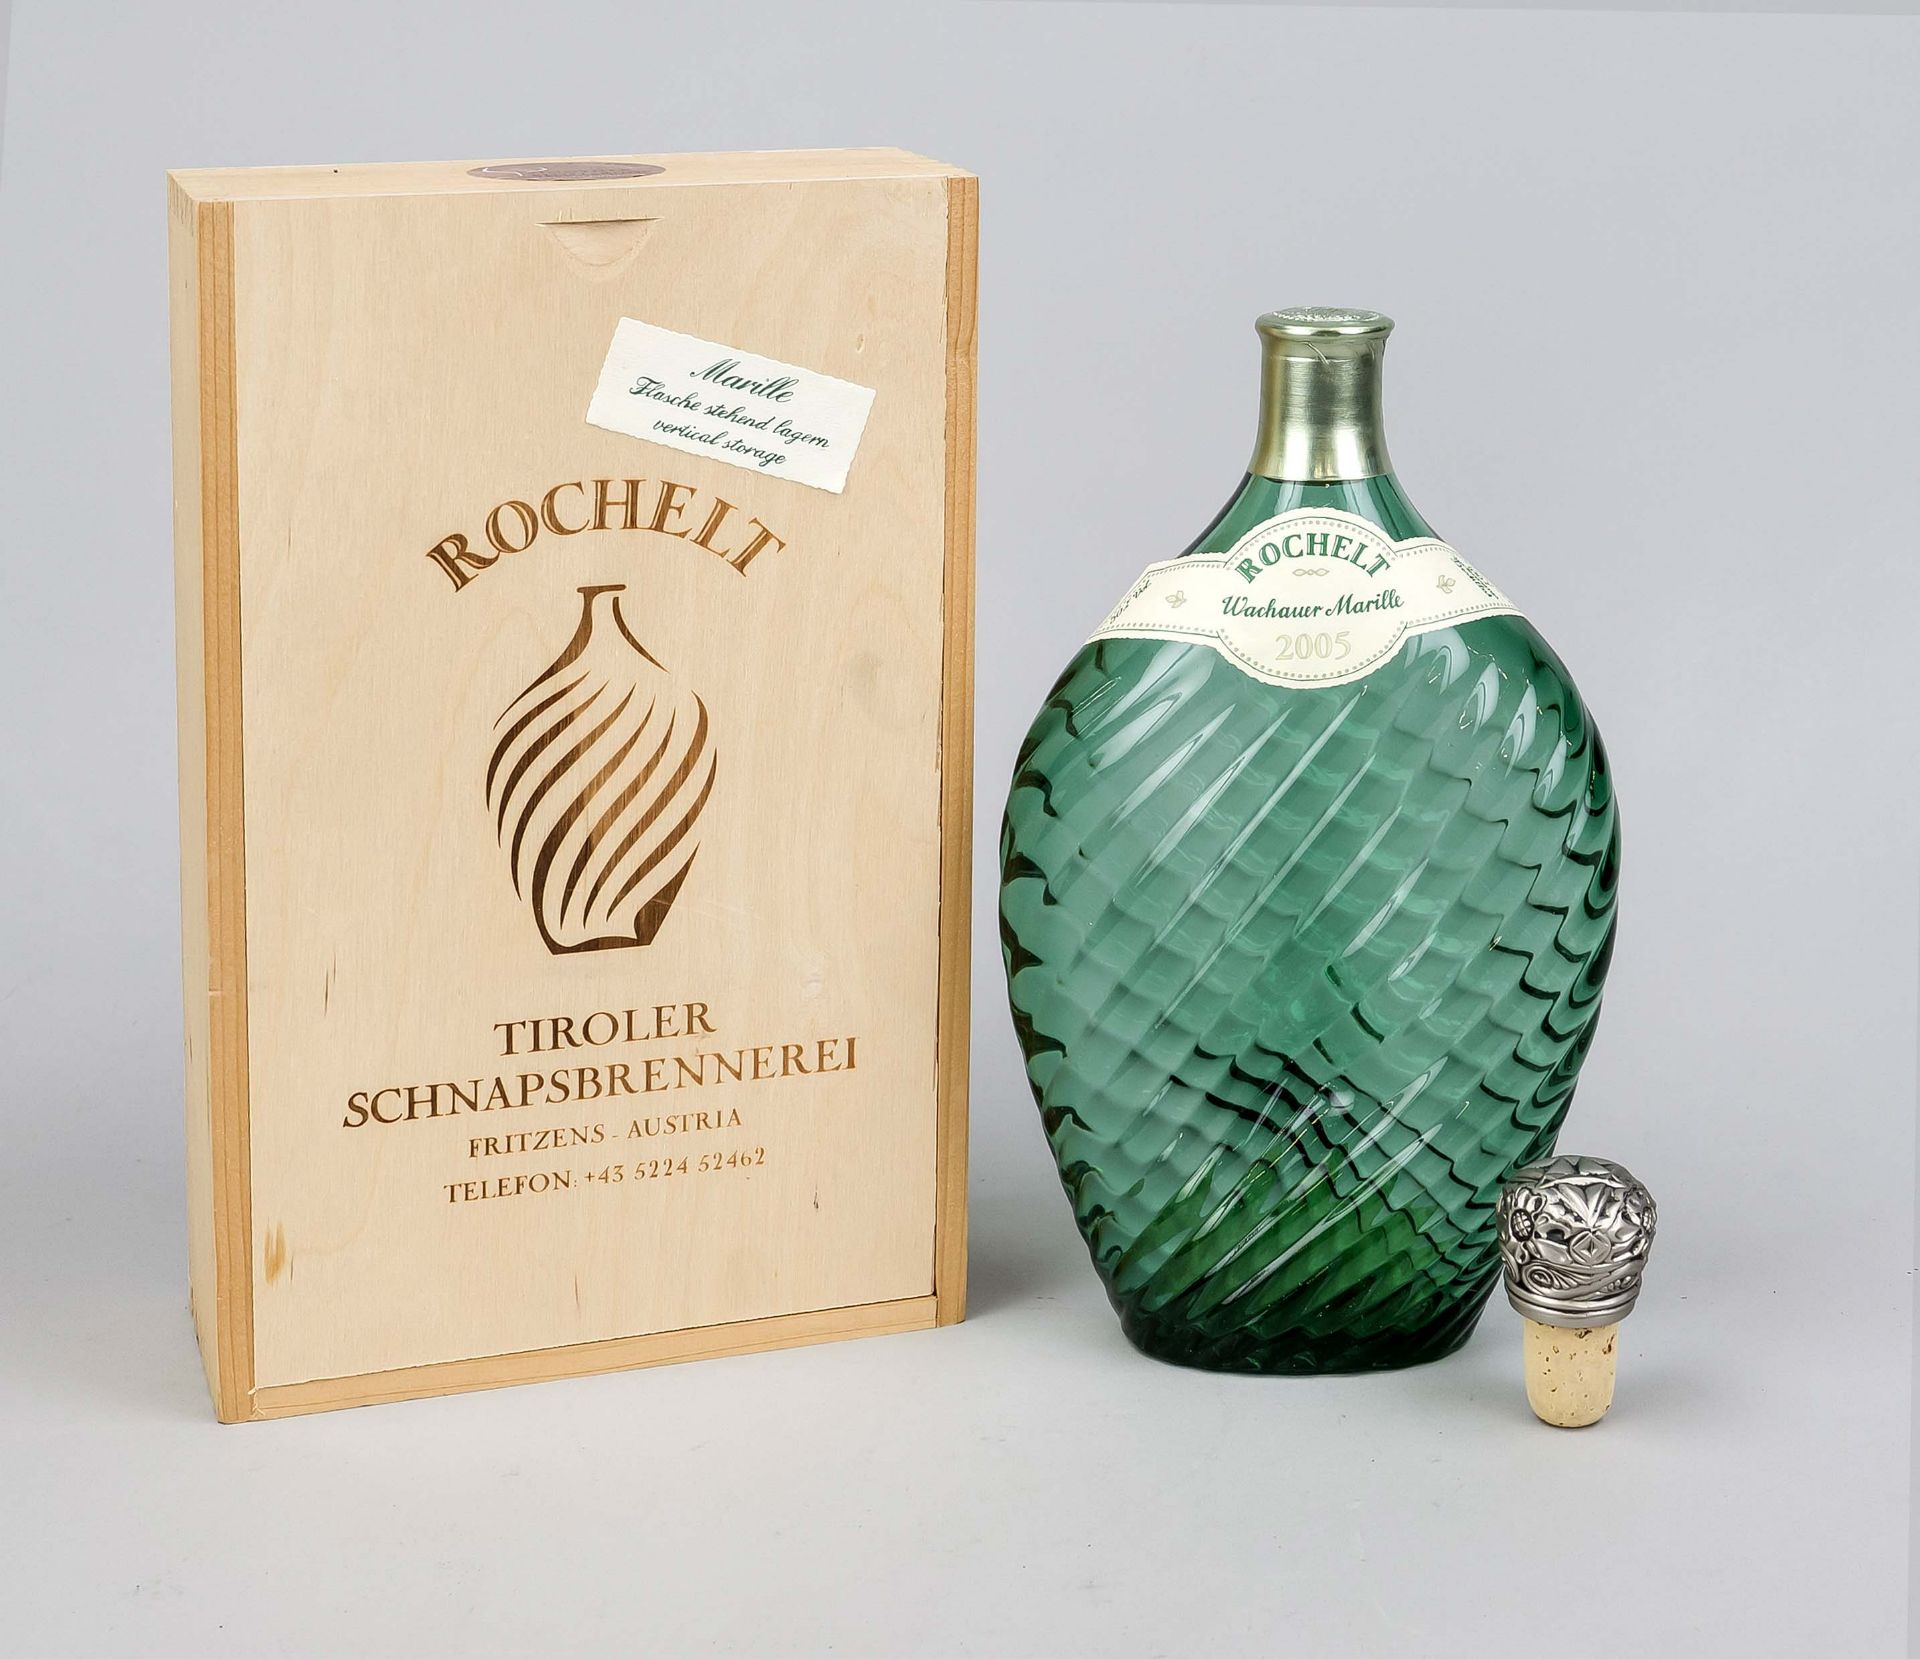 Rochelt Wachau apricot (2005), Austria (Tyrol). In elegant green bottle in original wooden transport